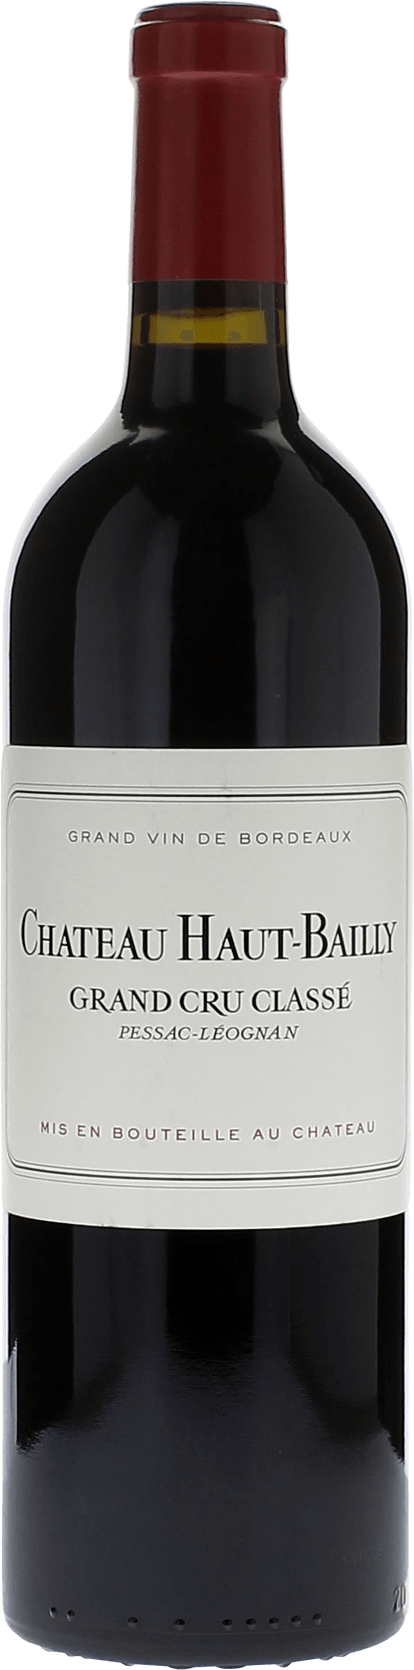 Haut bailly 1983 cru class Pessac-Lognan, Bordeaux rouge